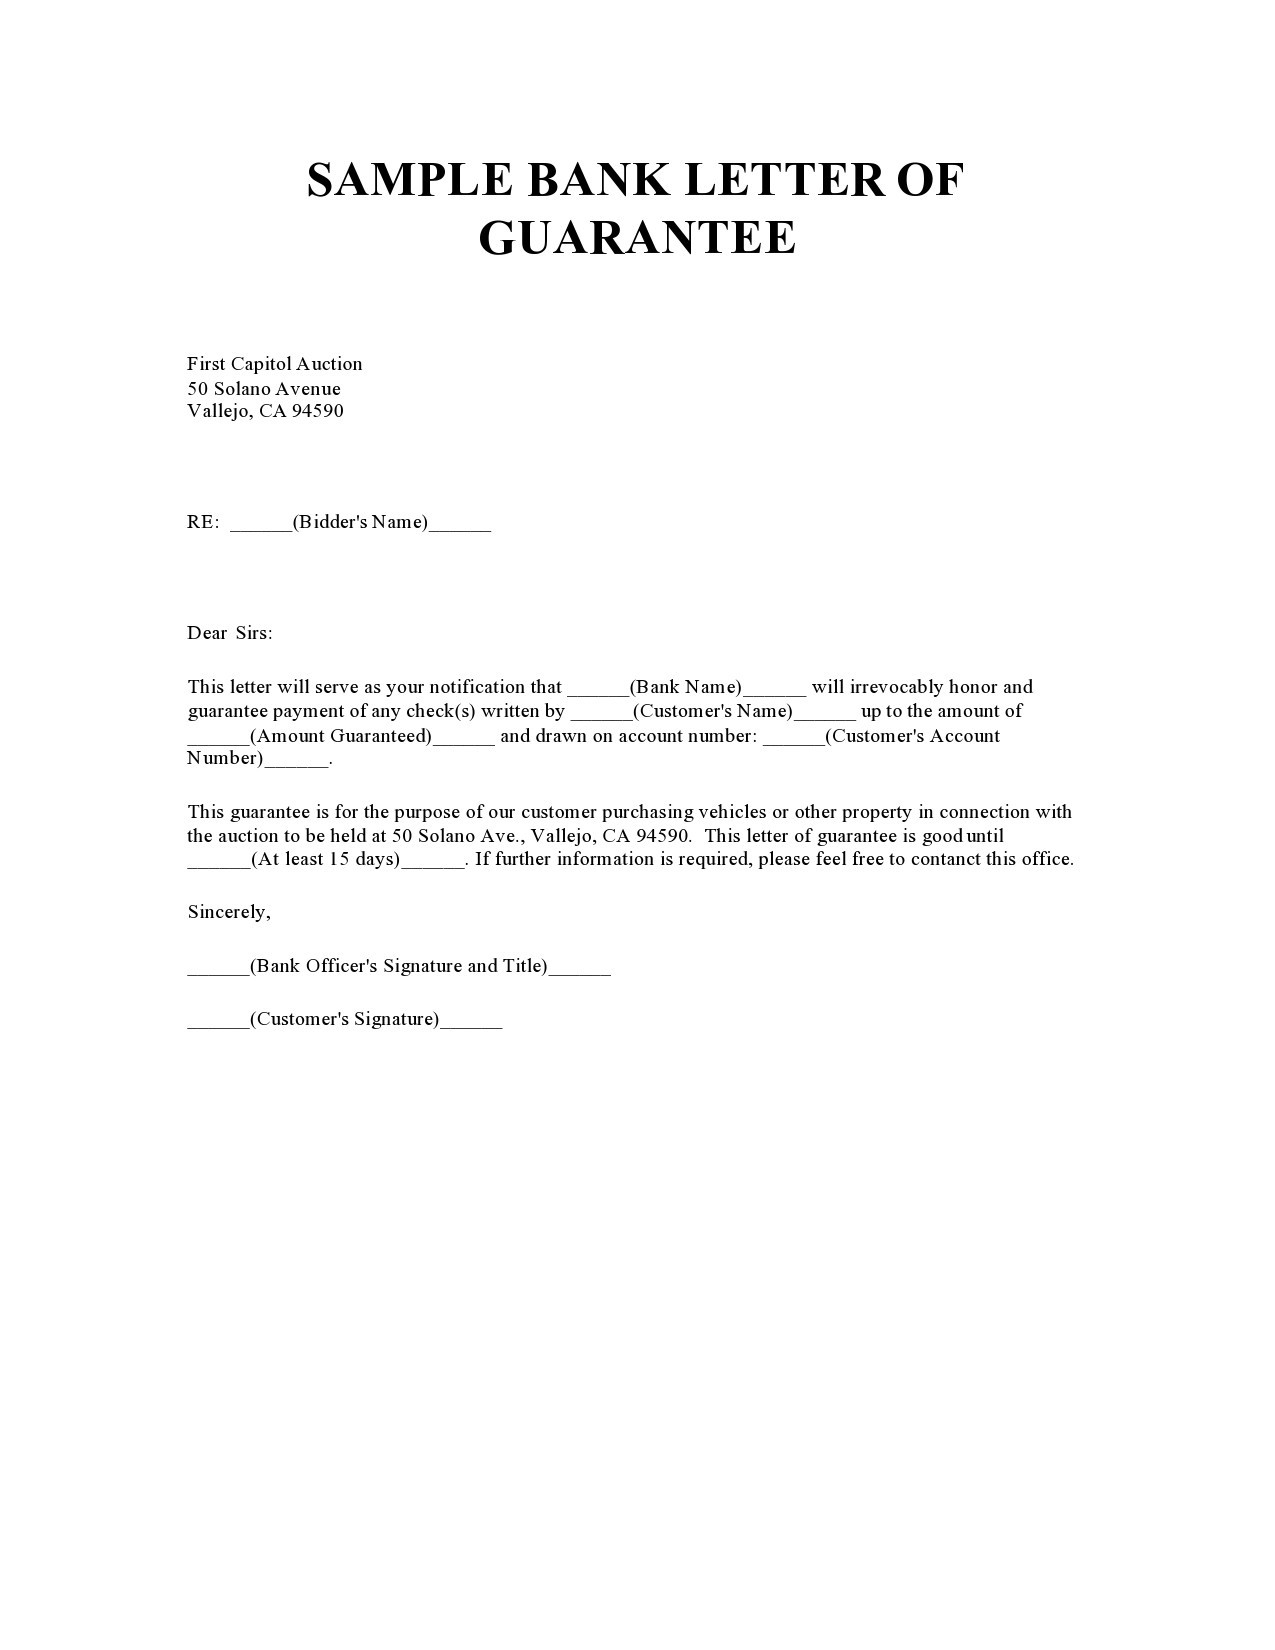 45-professional-letter-of-guarantee-samples-templatelab